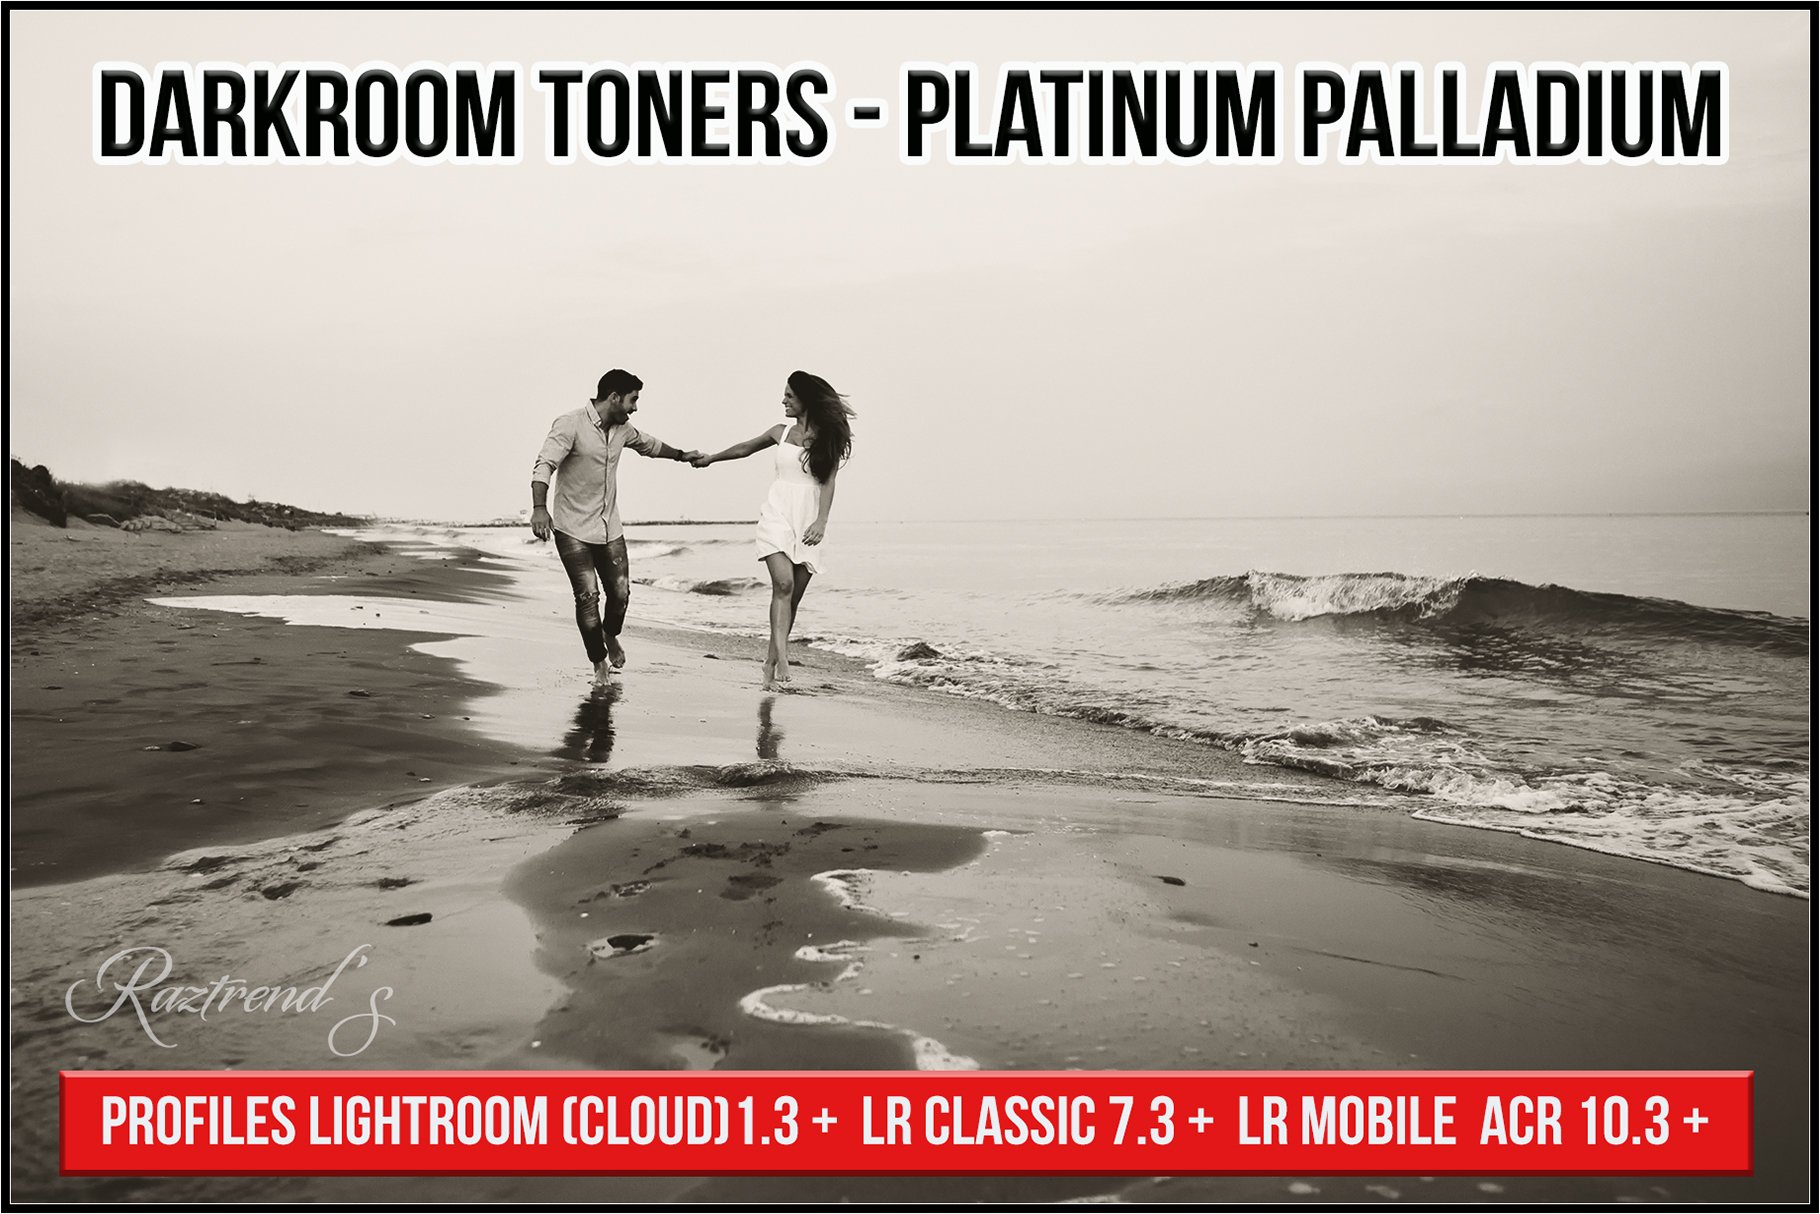 Darkroom Toners - Platinum Palladiumcover image.